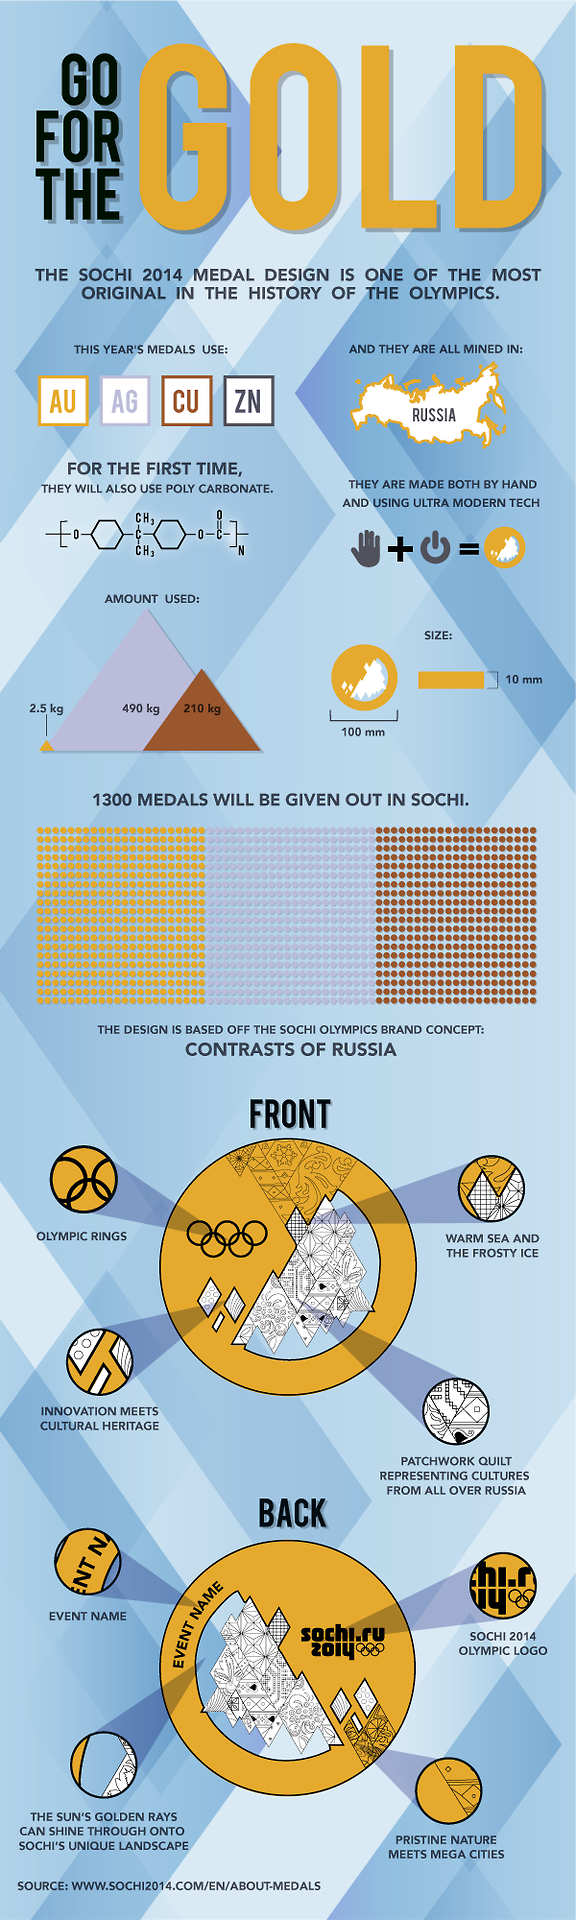 infographics Olympics sochi Russia gold Medal medals letter society jenn dimenna